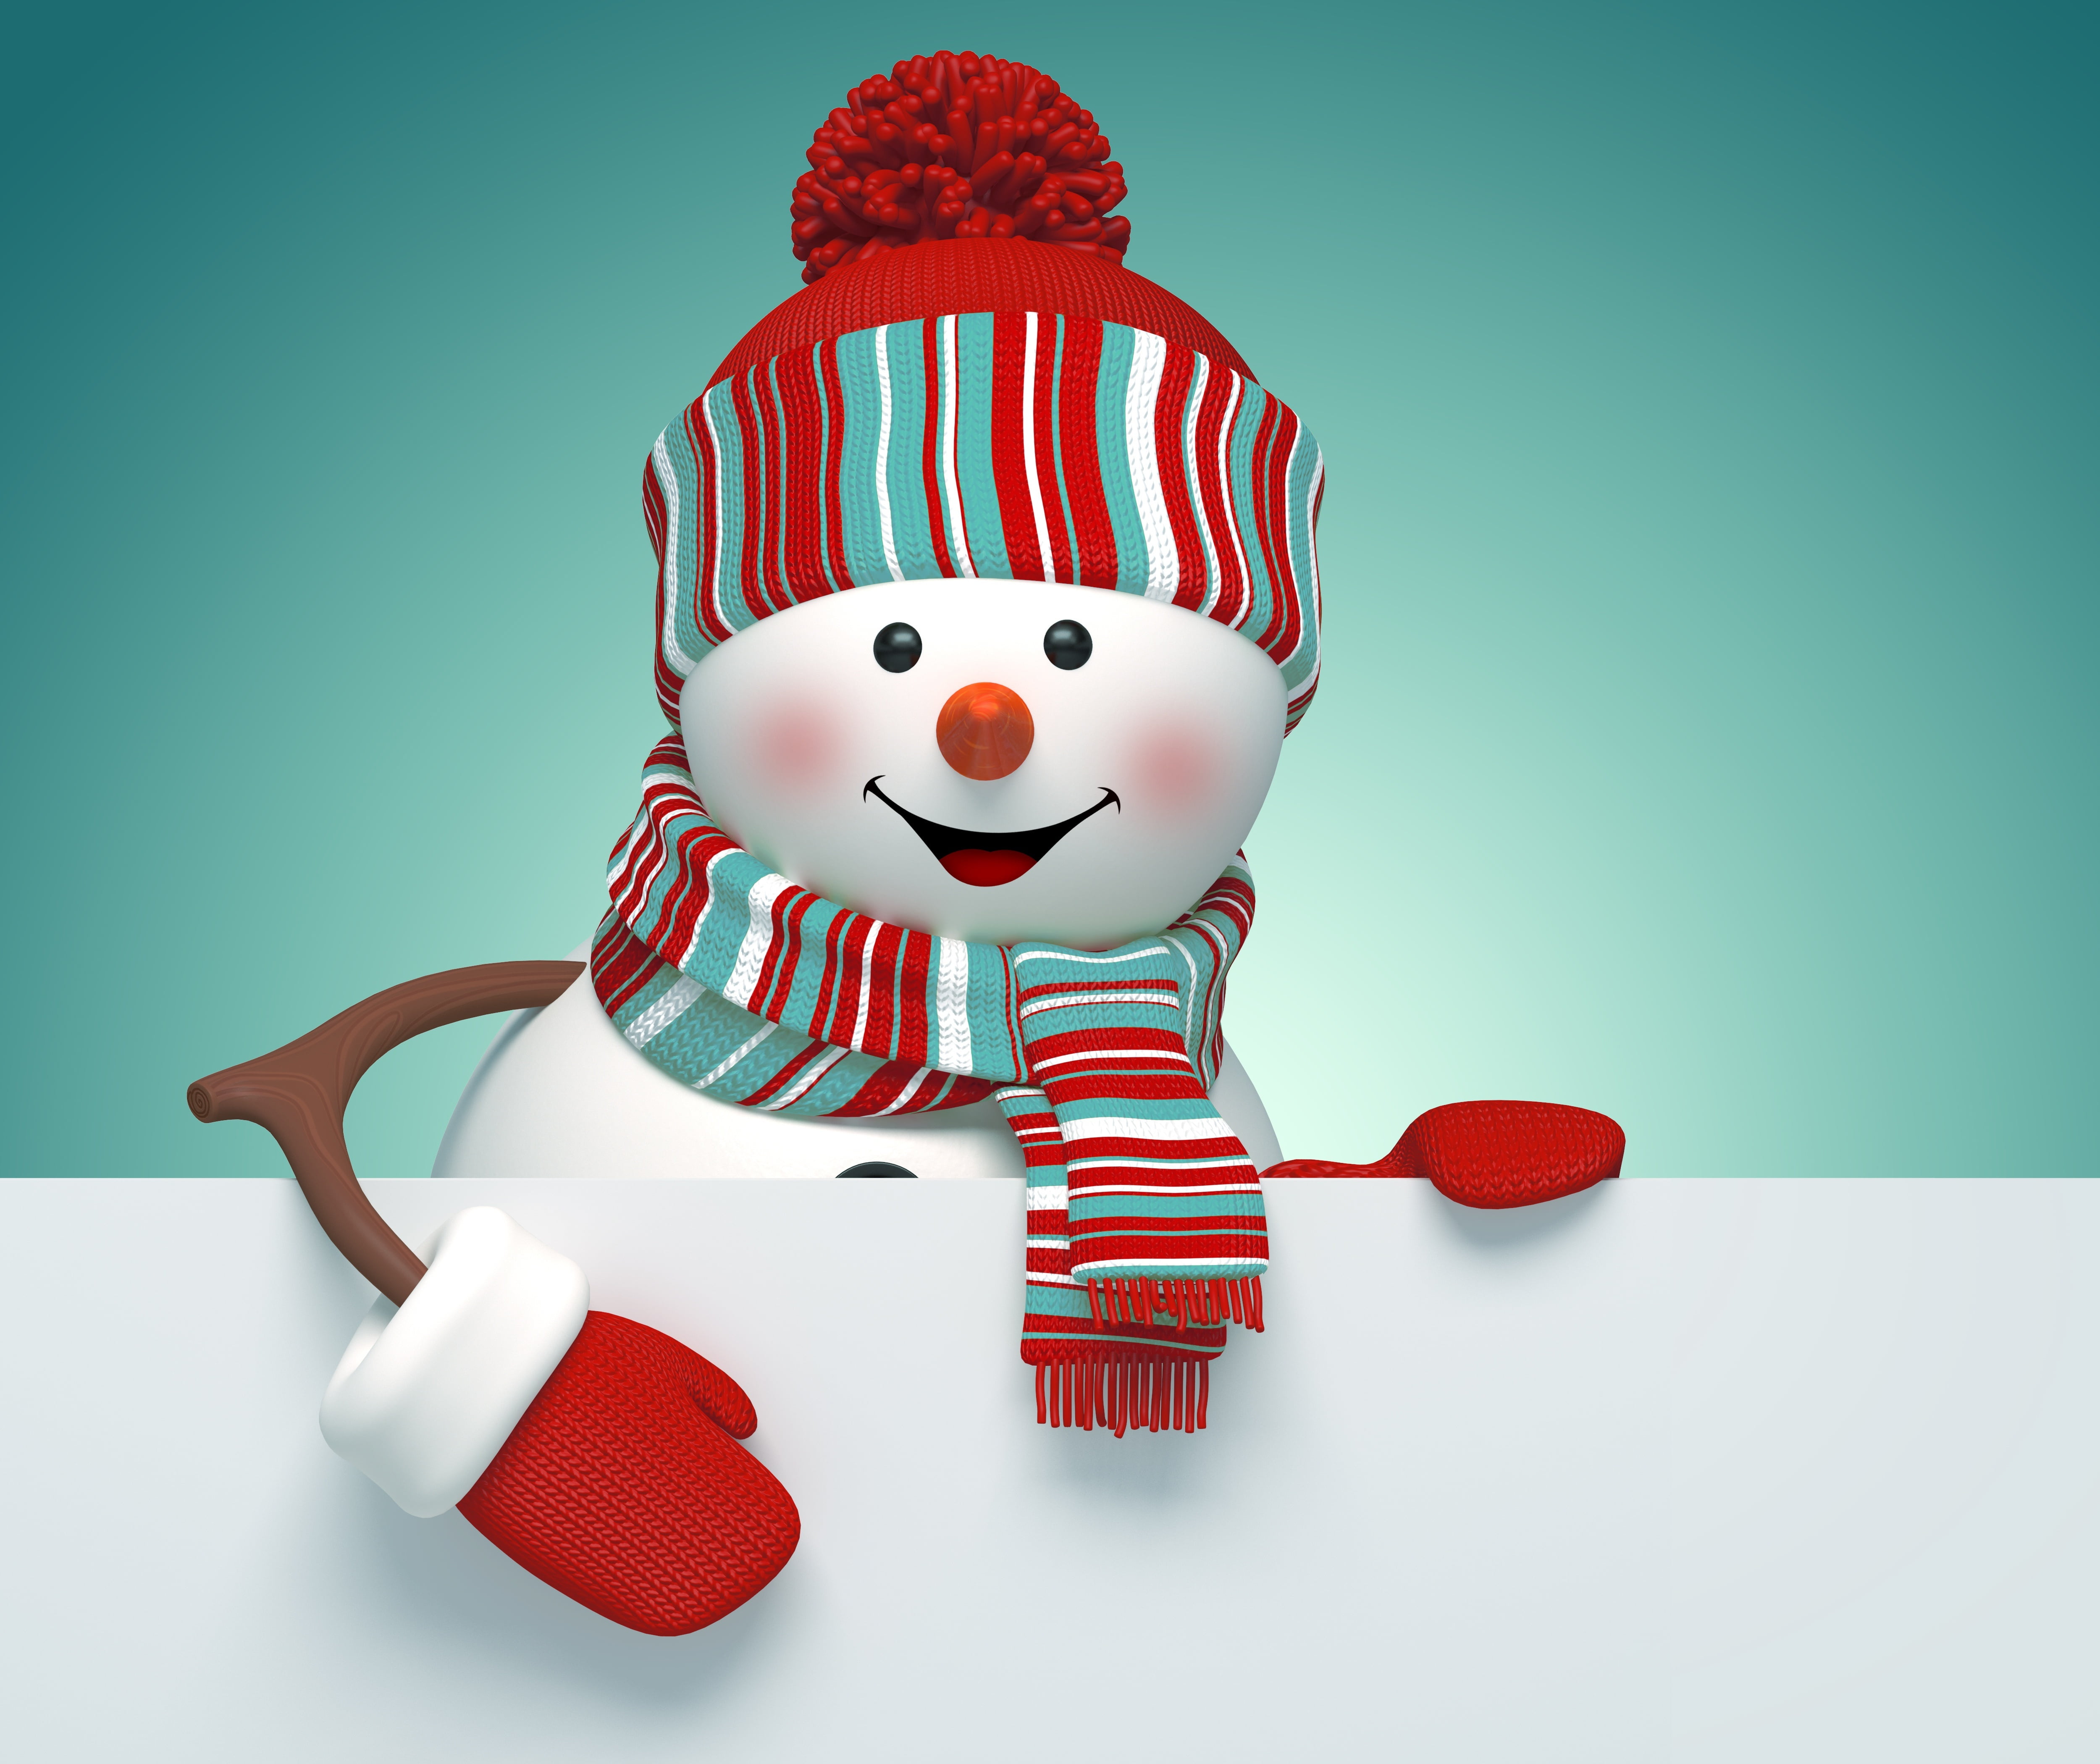 Merry Christmas Cute Snowman - HD Wallpaper 